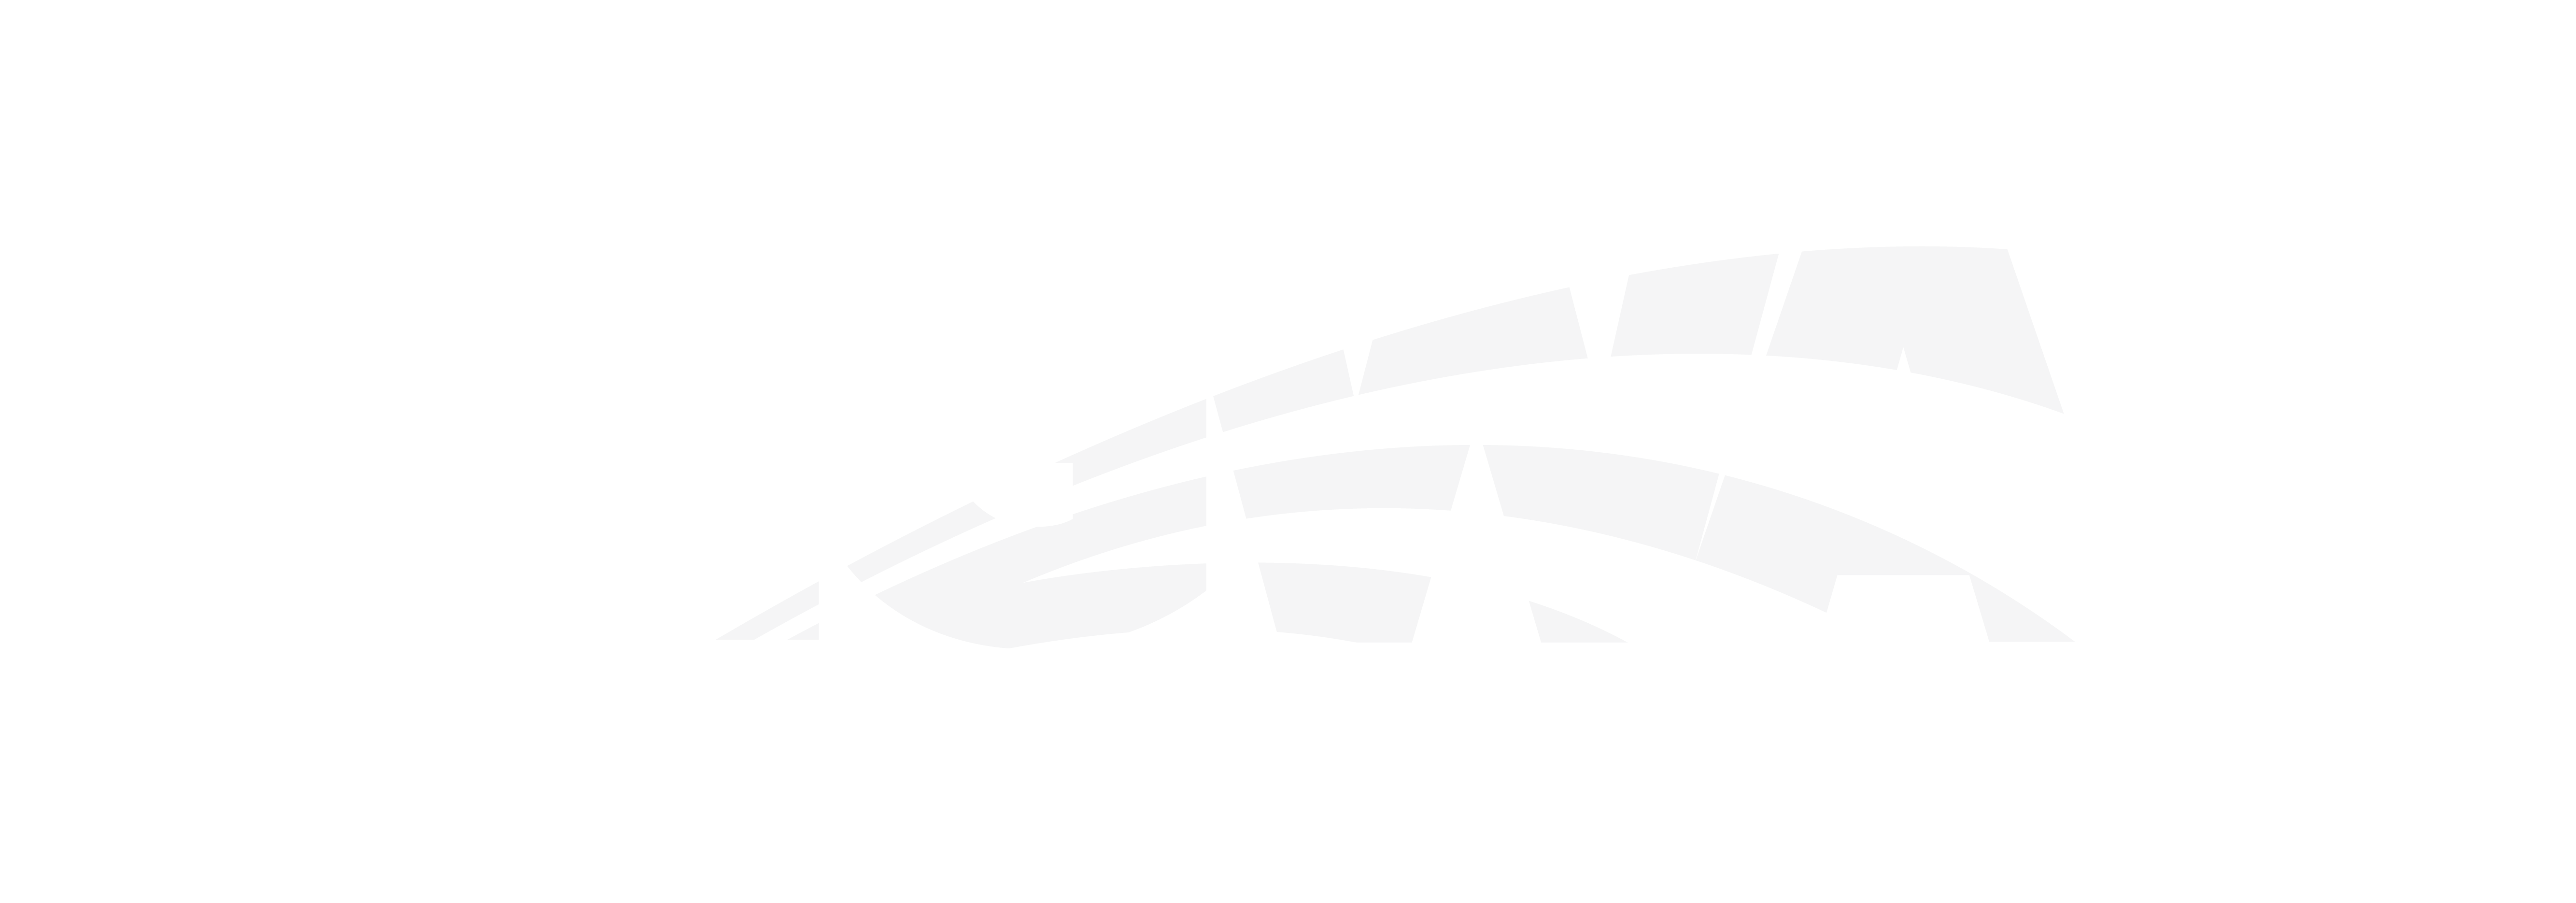 NGWA: the groundwater association